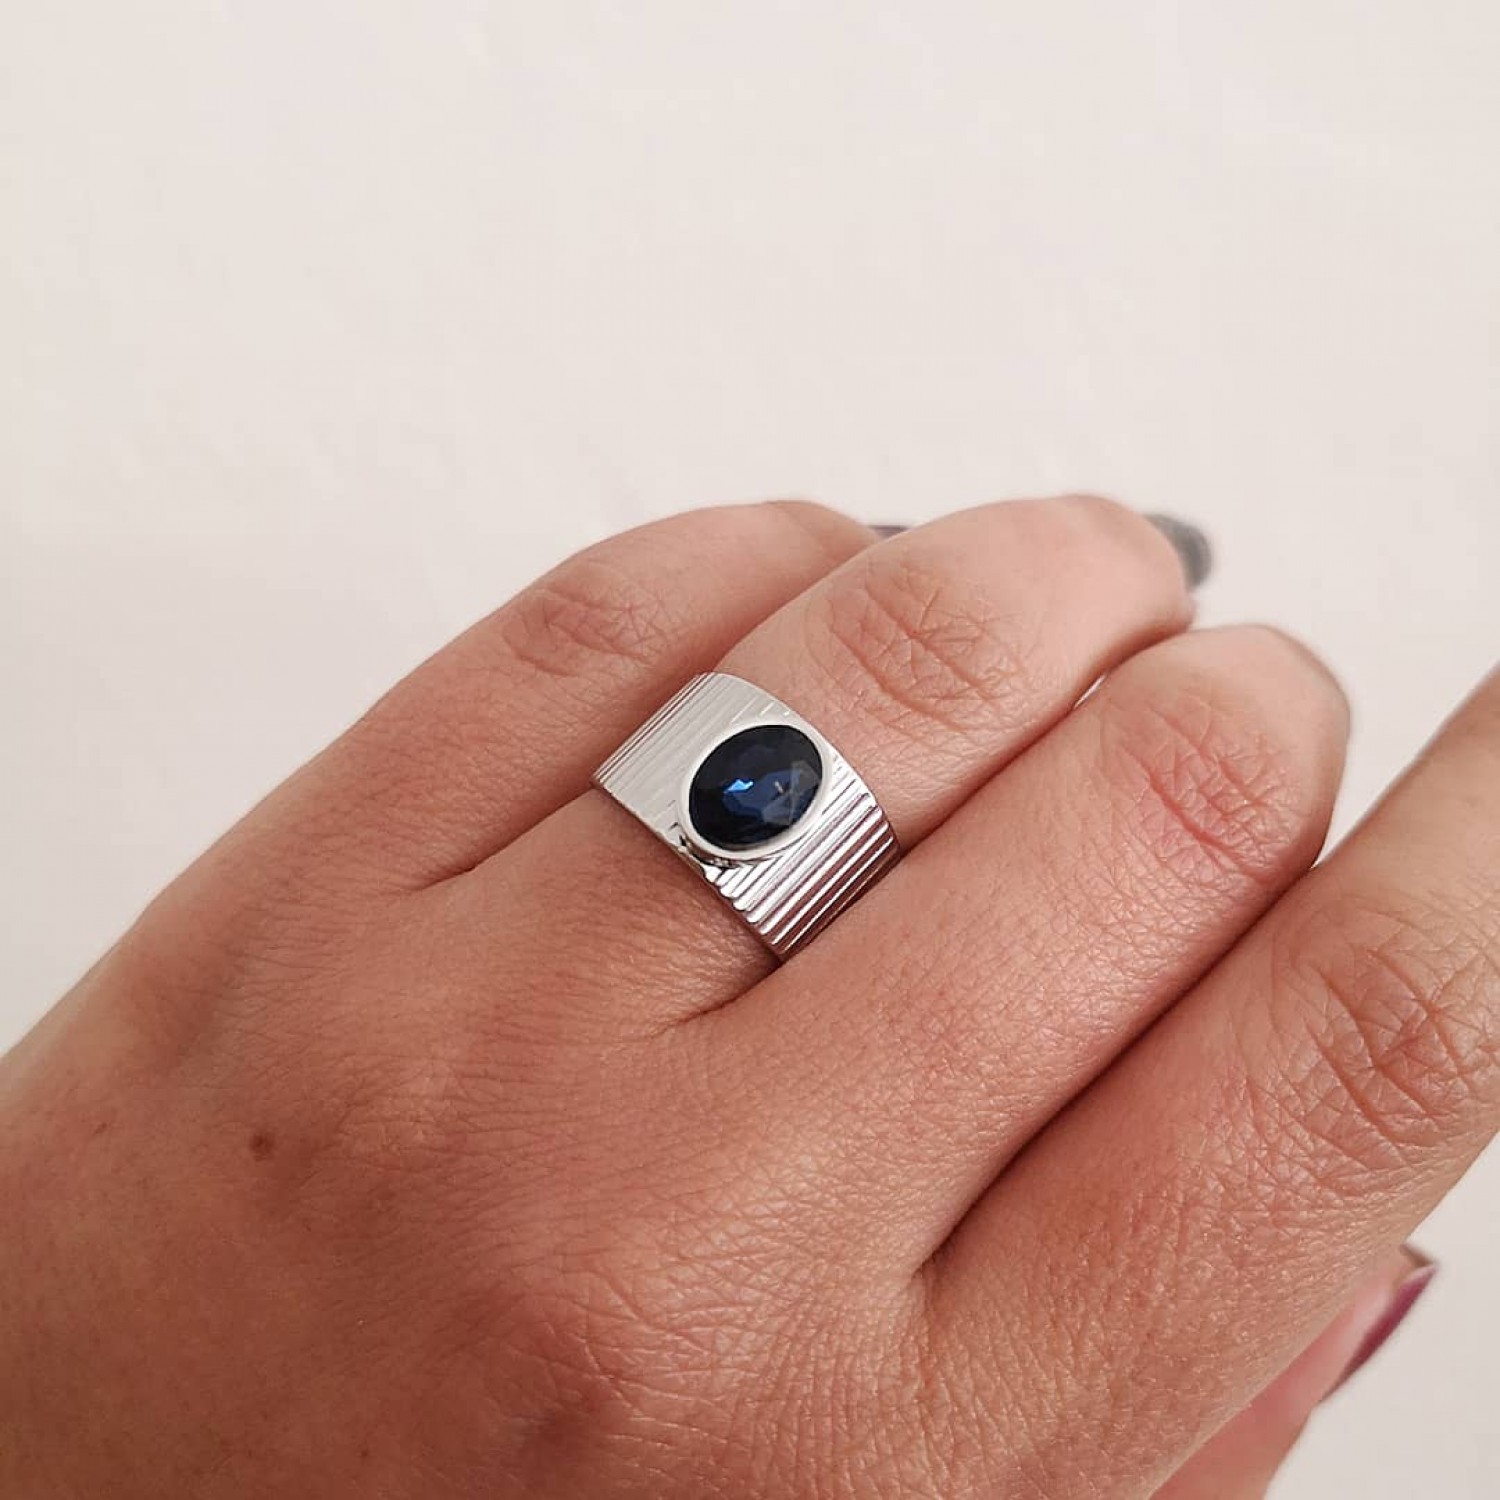 STAINLESS STEEL δαχτυλίδι ανοιγόμενο μπλε πέτρα ασημί.